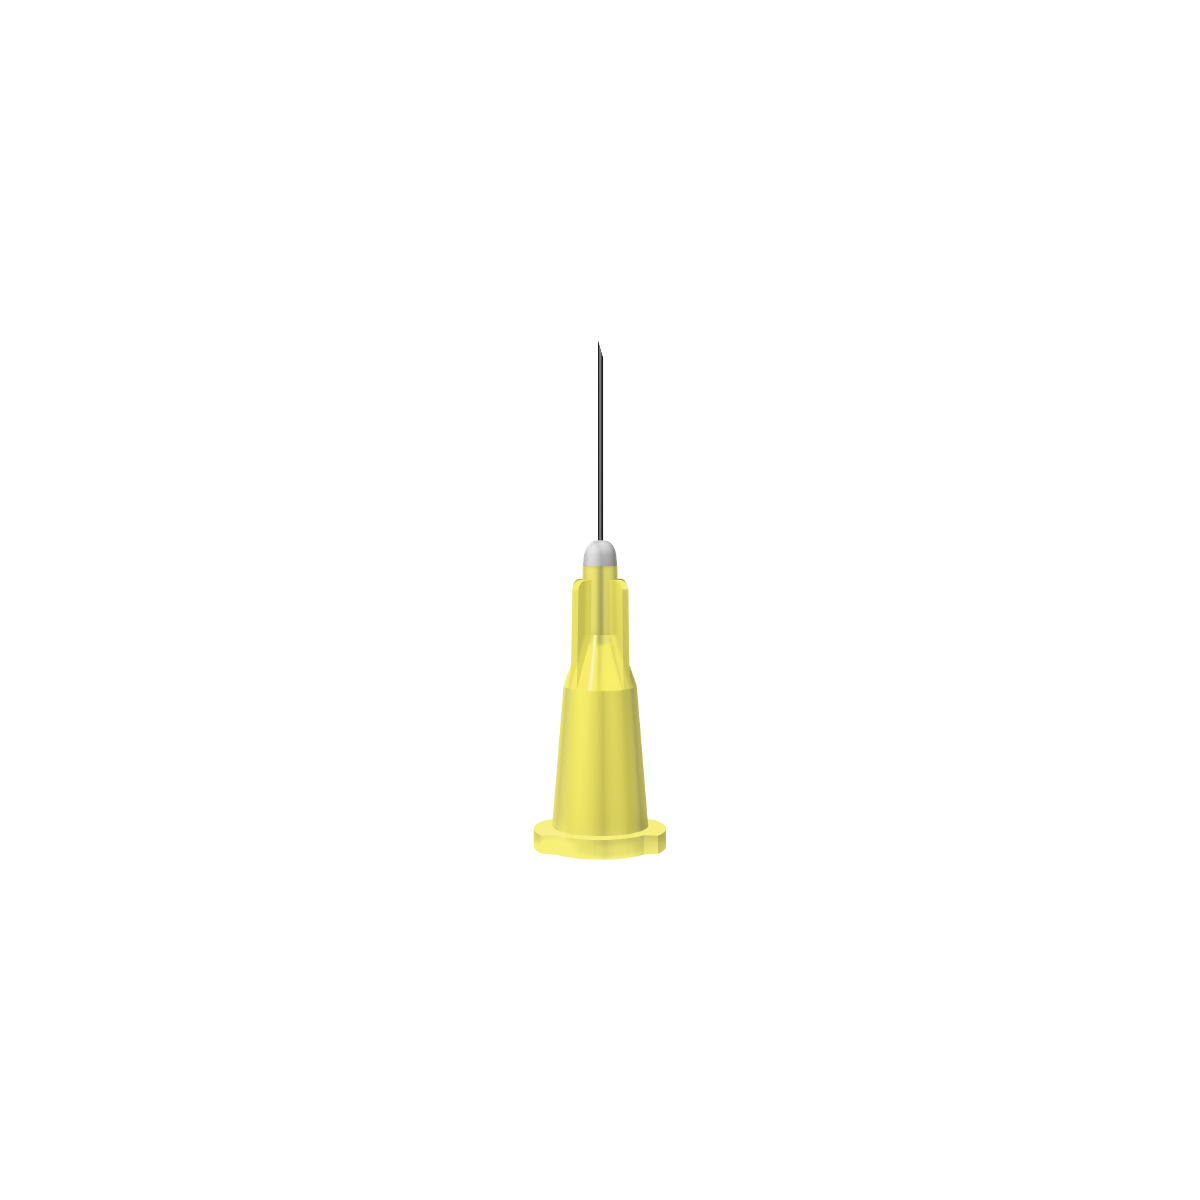 BBraun: Yellow 30G 12mm (½ inch) needle